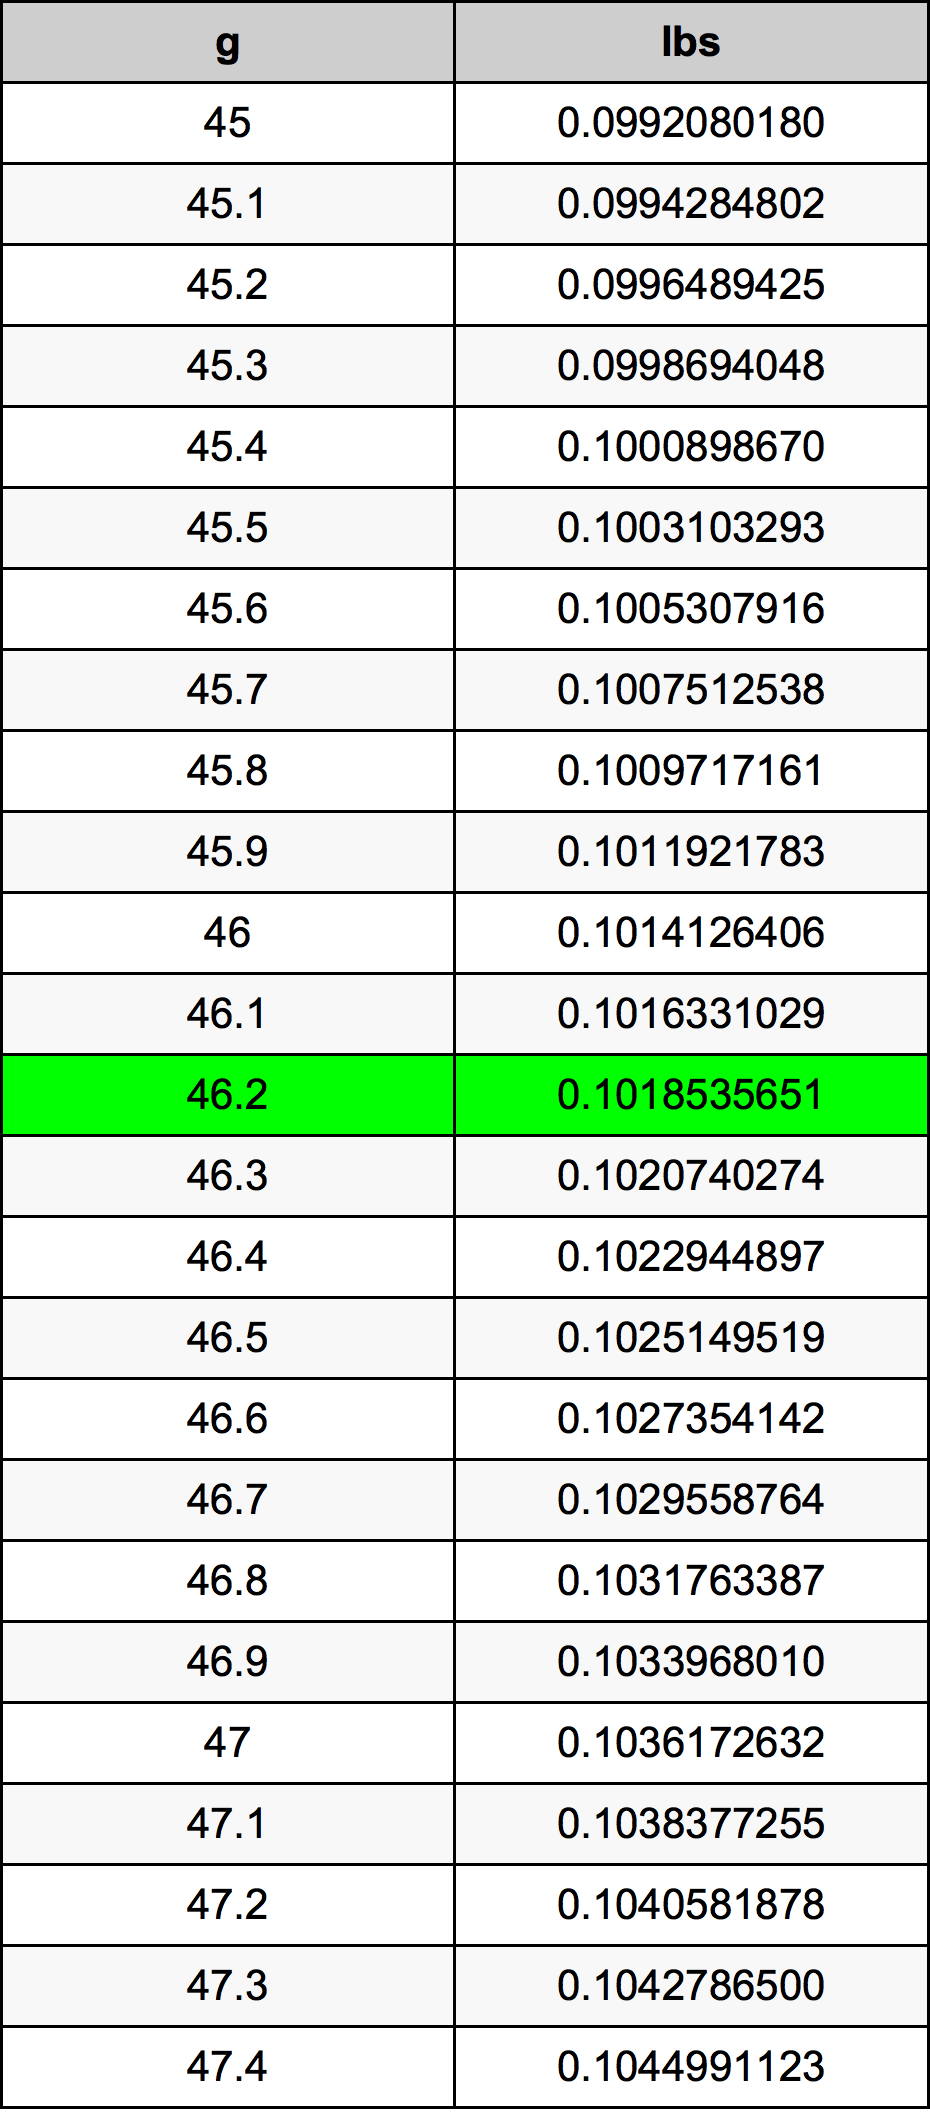 46.2 غرام جدول تحويل